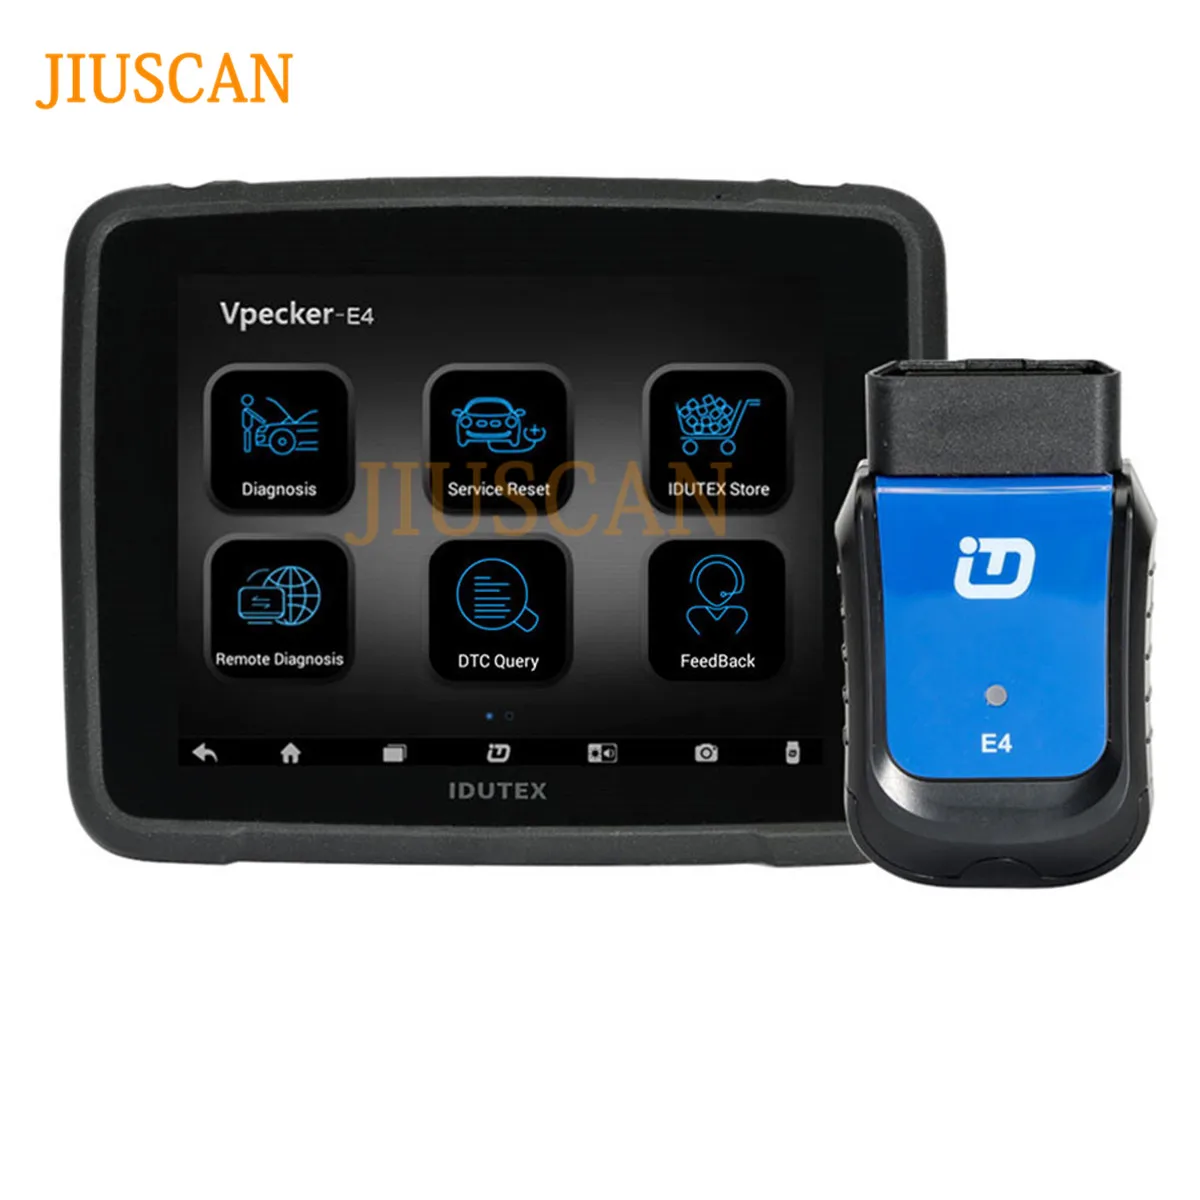 JIUSCAN Vpecker E4 OBD2 Wifi/Bluetooth OBD 2 Автомобильный сканер+ 8 дюймов Android Vpecker планшет диагностические инструменты